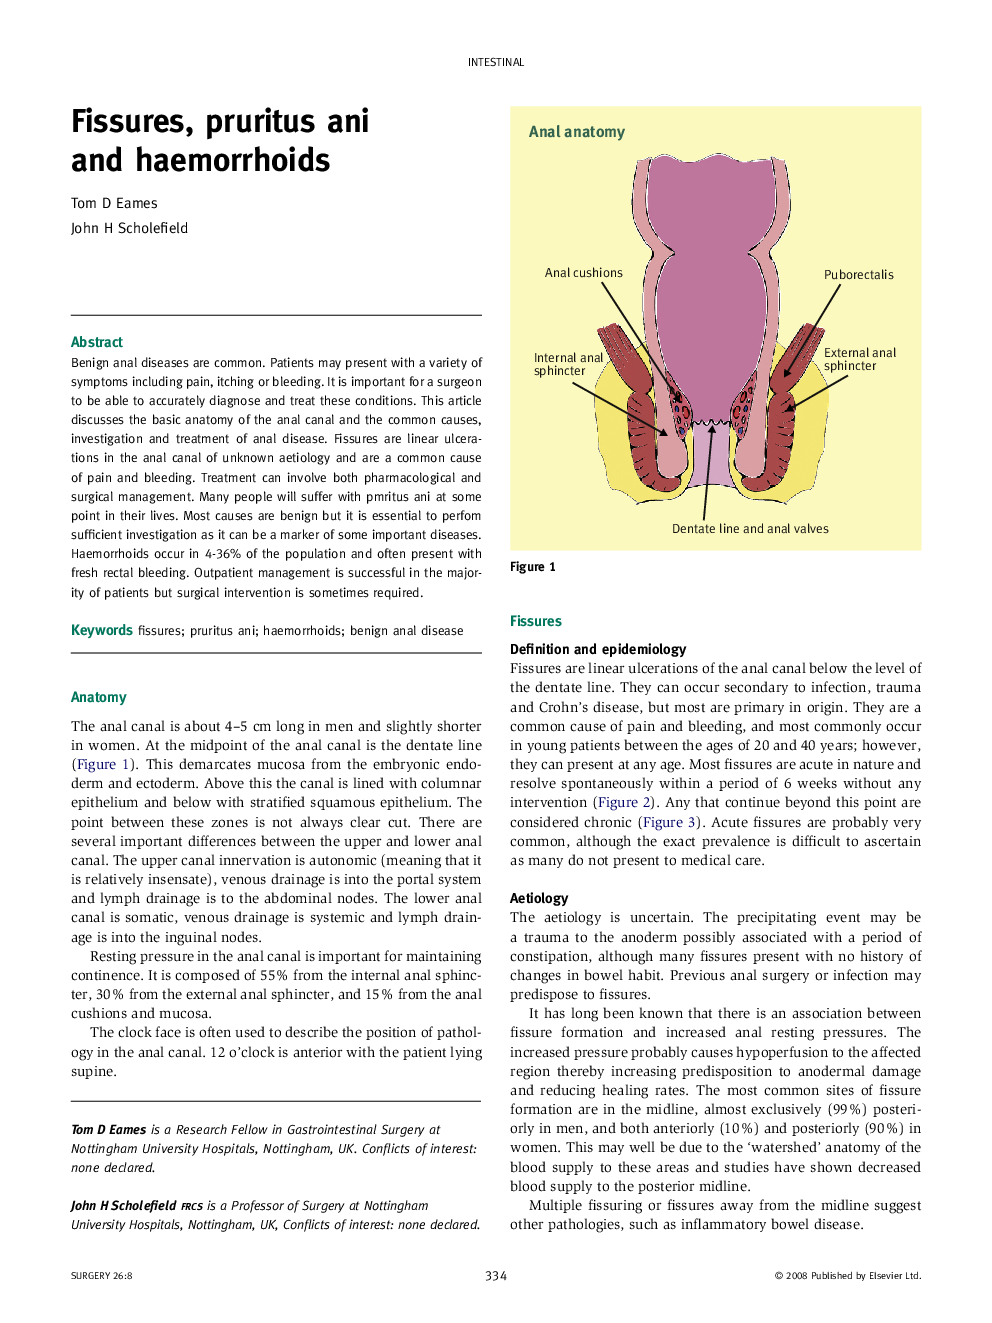 Fissures, pruritus ani and haemorrhoids